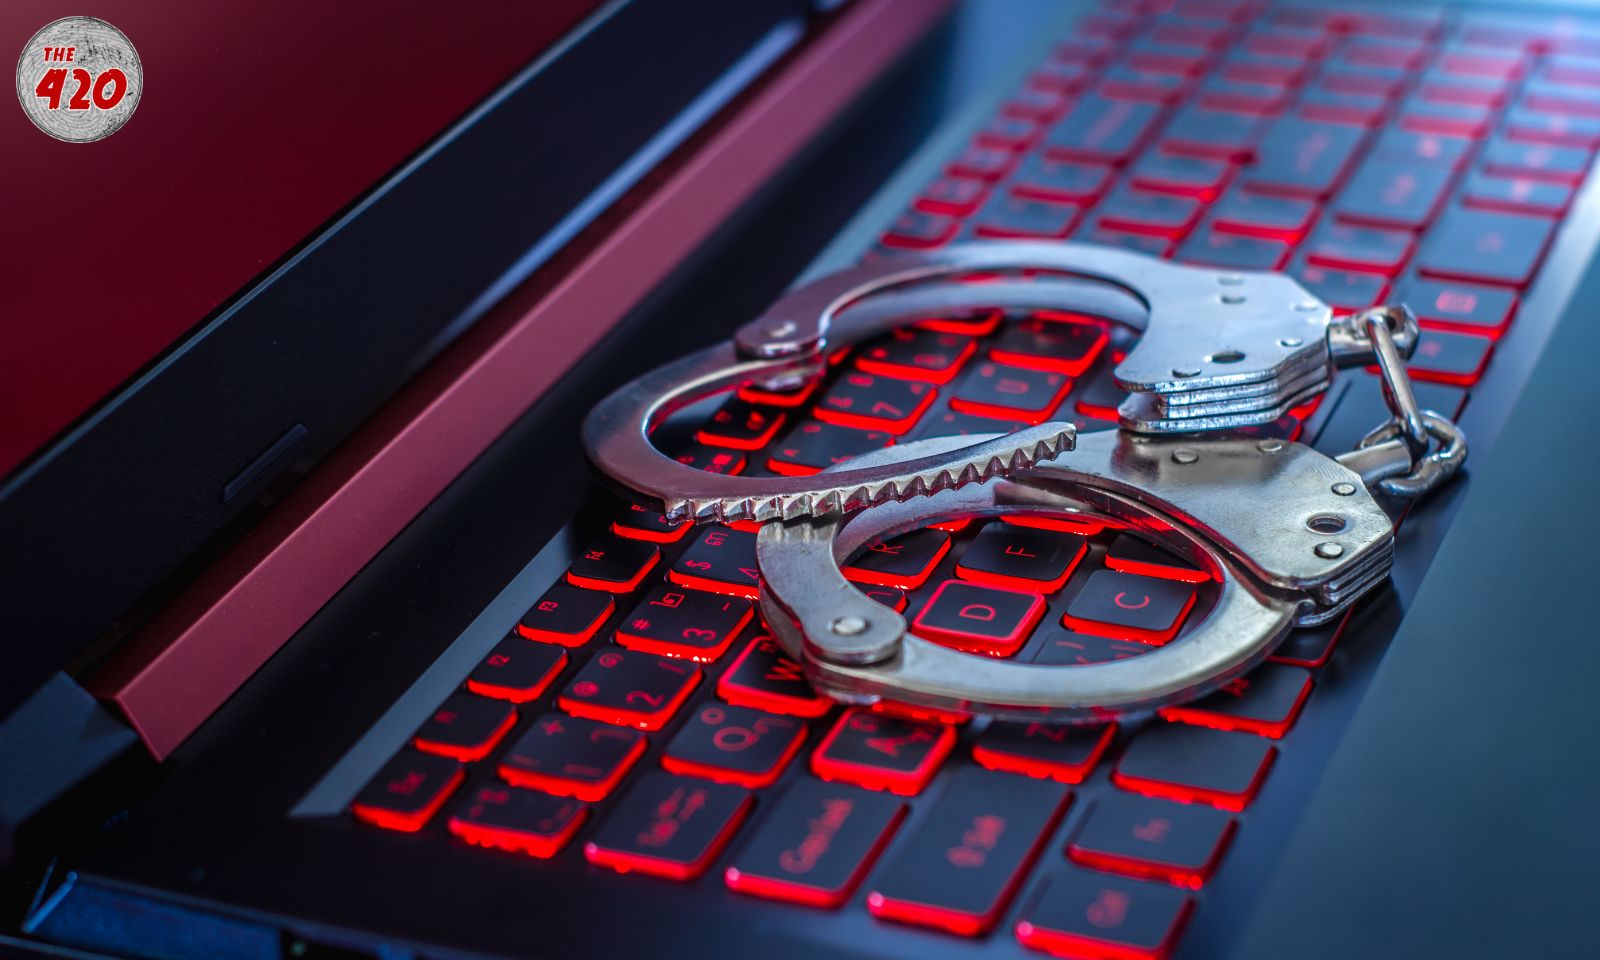 Cyber Criminals' International Web Dubai-Pakistan Connection Exposed in Dehradun Fraud Case